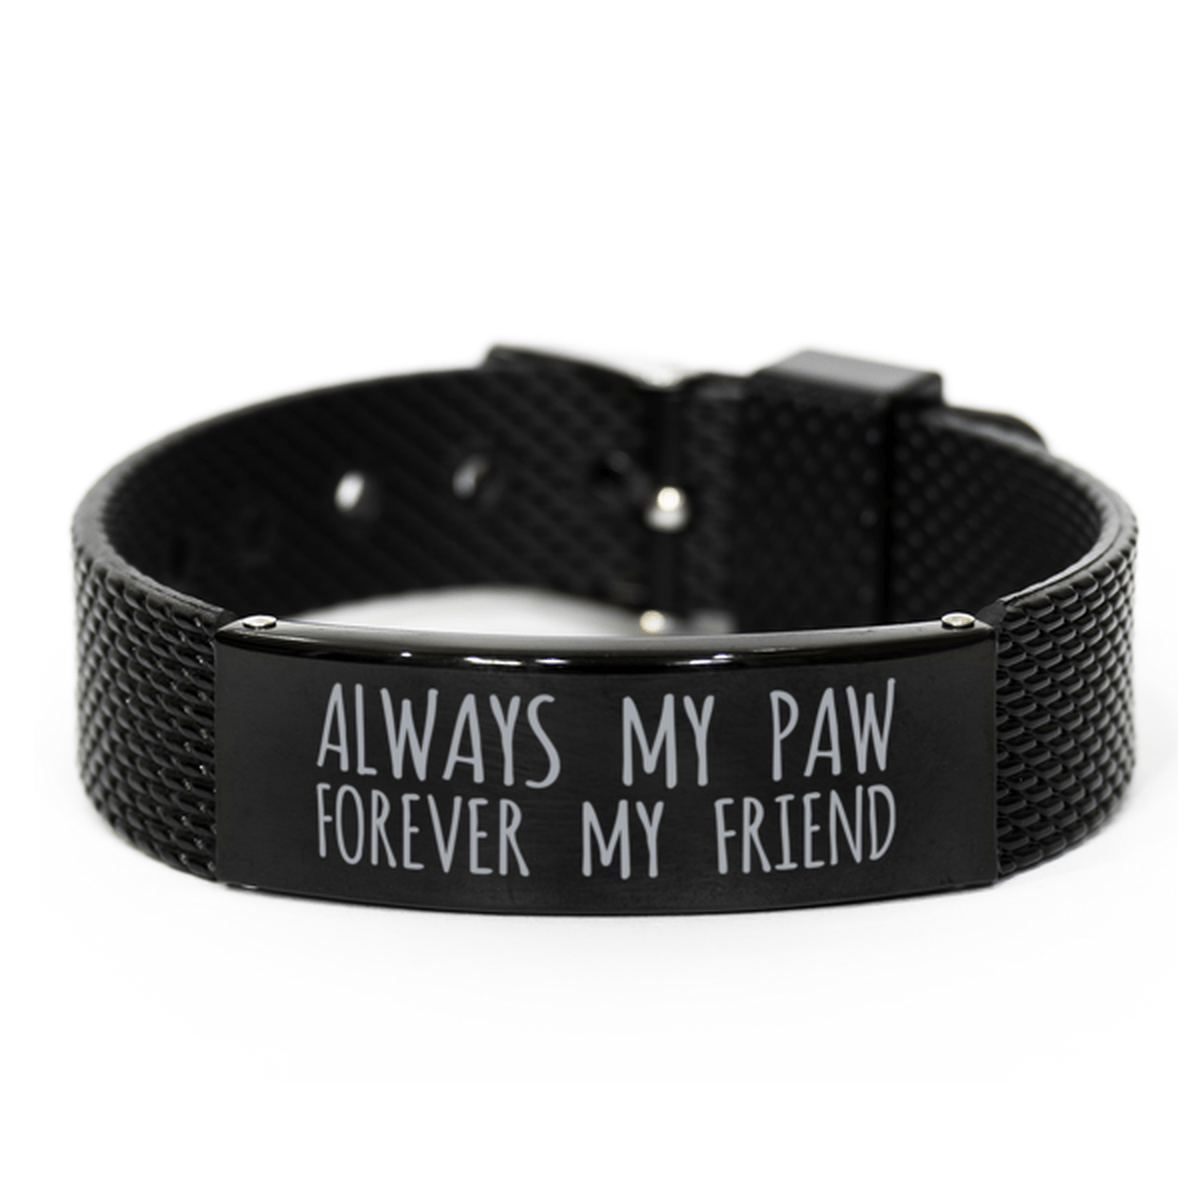 Inspirational Paw Black Shark Mesh Bracelet, Always My Paw Forever My Friend, Best Birthday Gifts for Family Friends